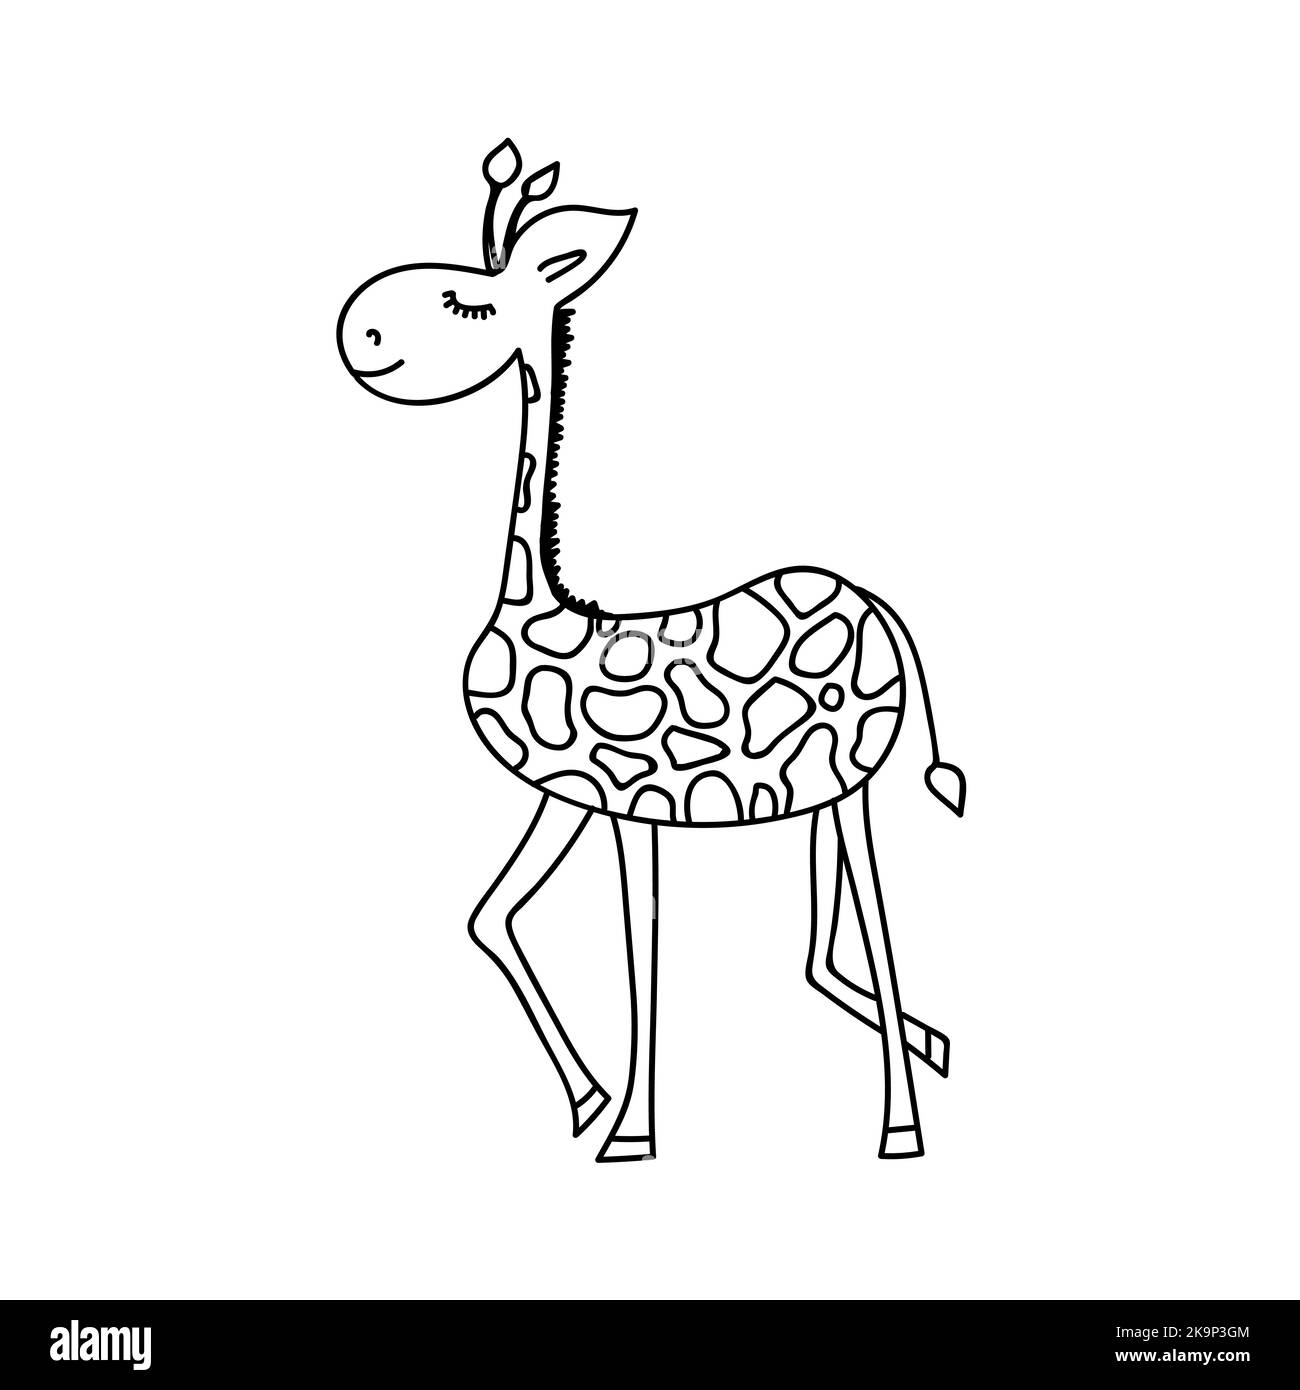 Vector illustration of funny cartoon style giraffe. Coloring book element Stock Vector